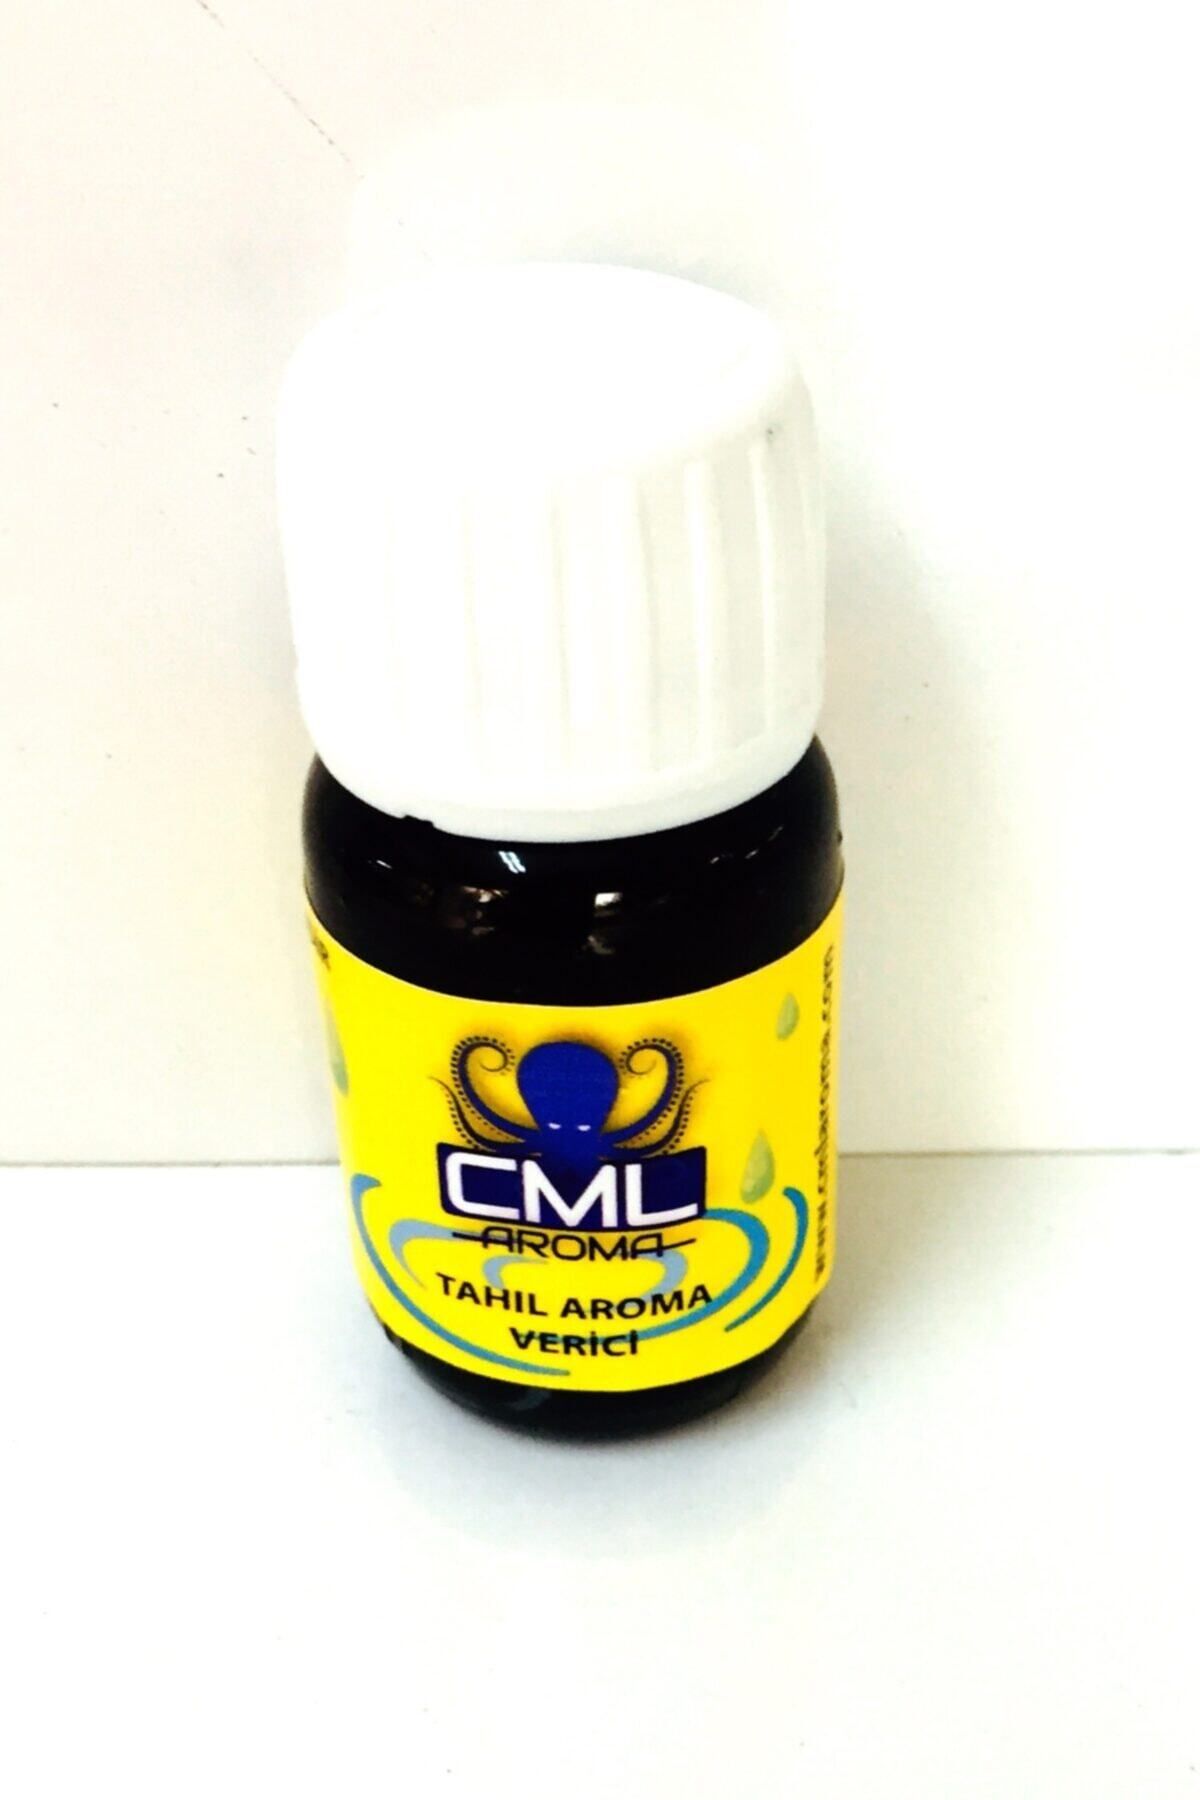 Cml Apsold Tahıl Aroma Verici 20 ml